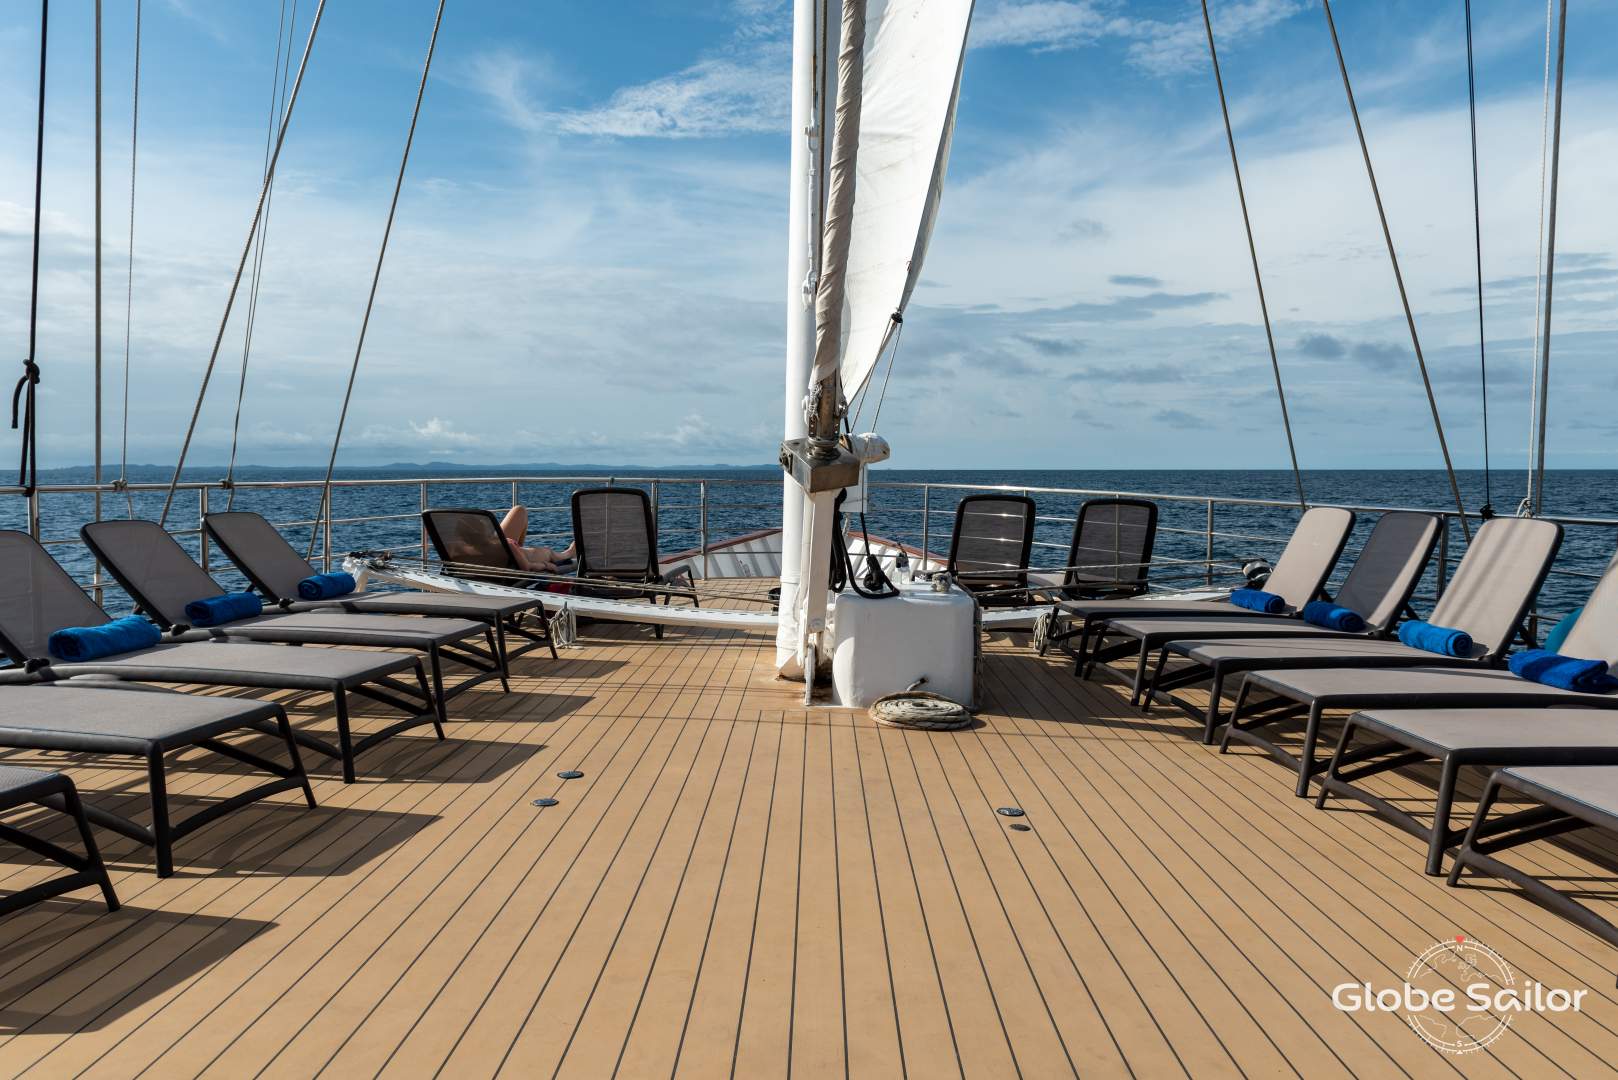 An ideal sun deck for observing the coast!